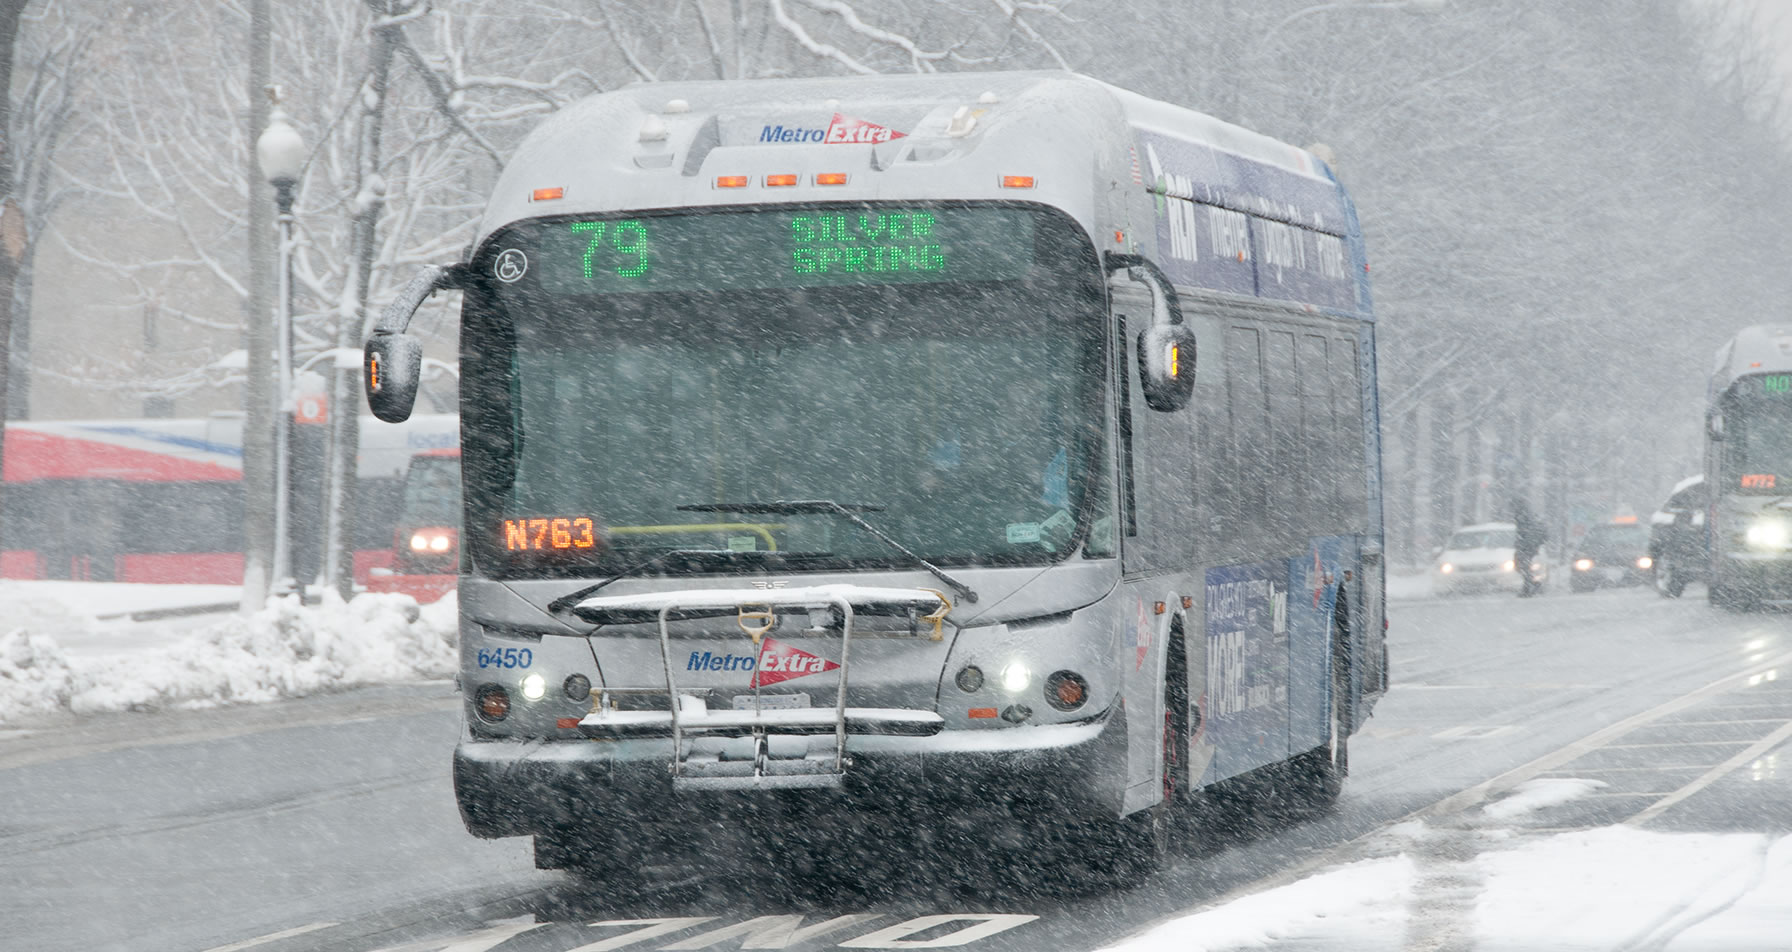 Silver Spring bus in snow